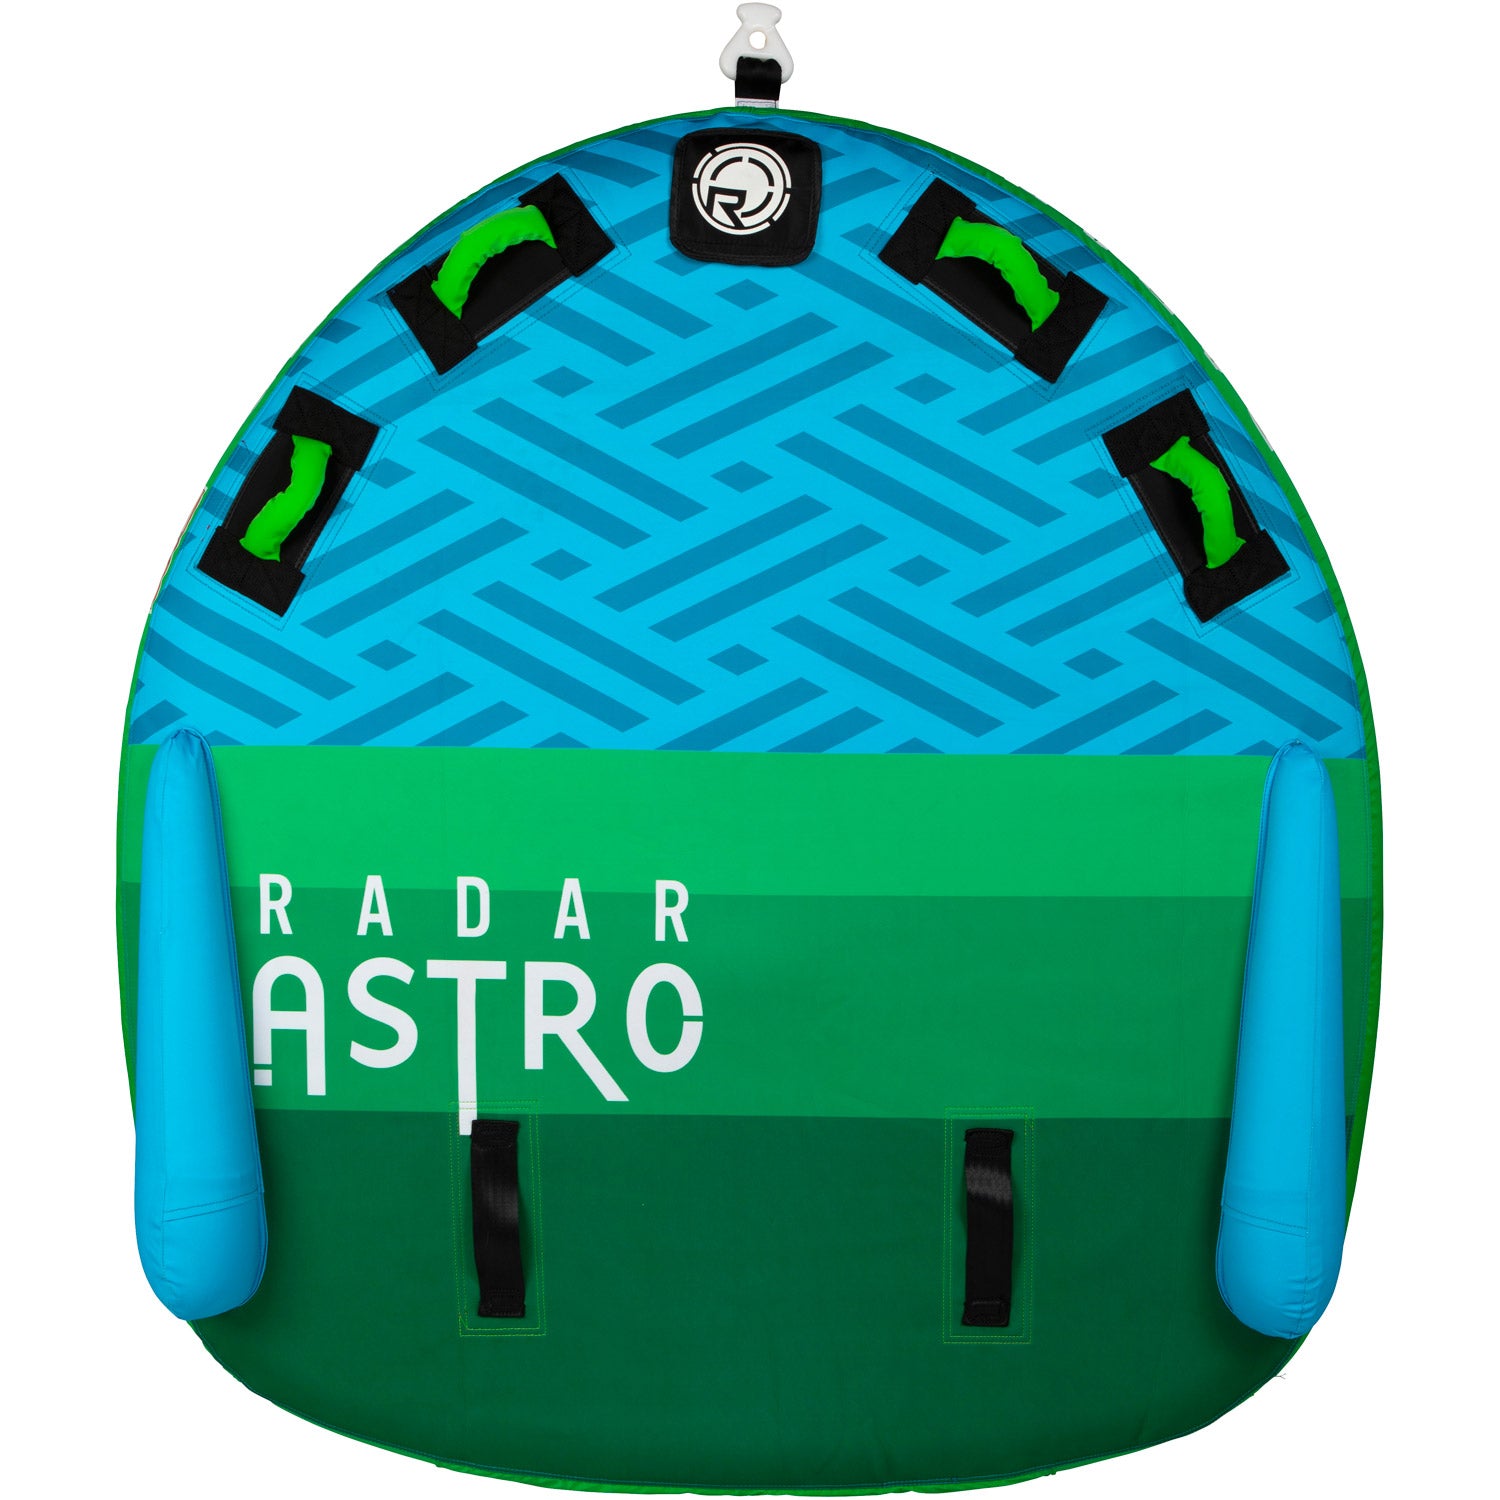 Astro 2P Ski Tube